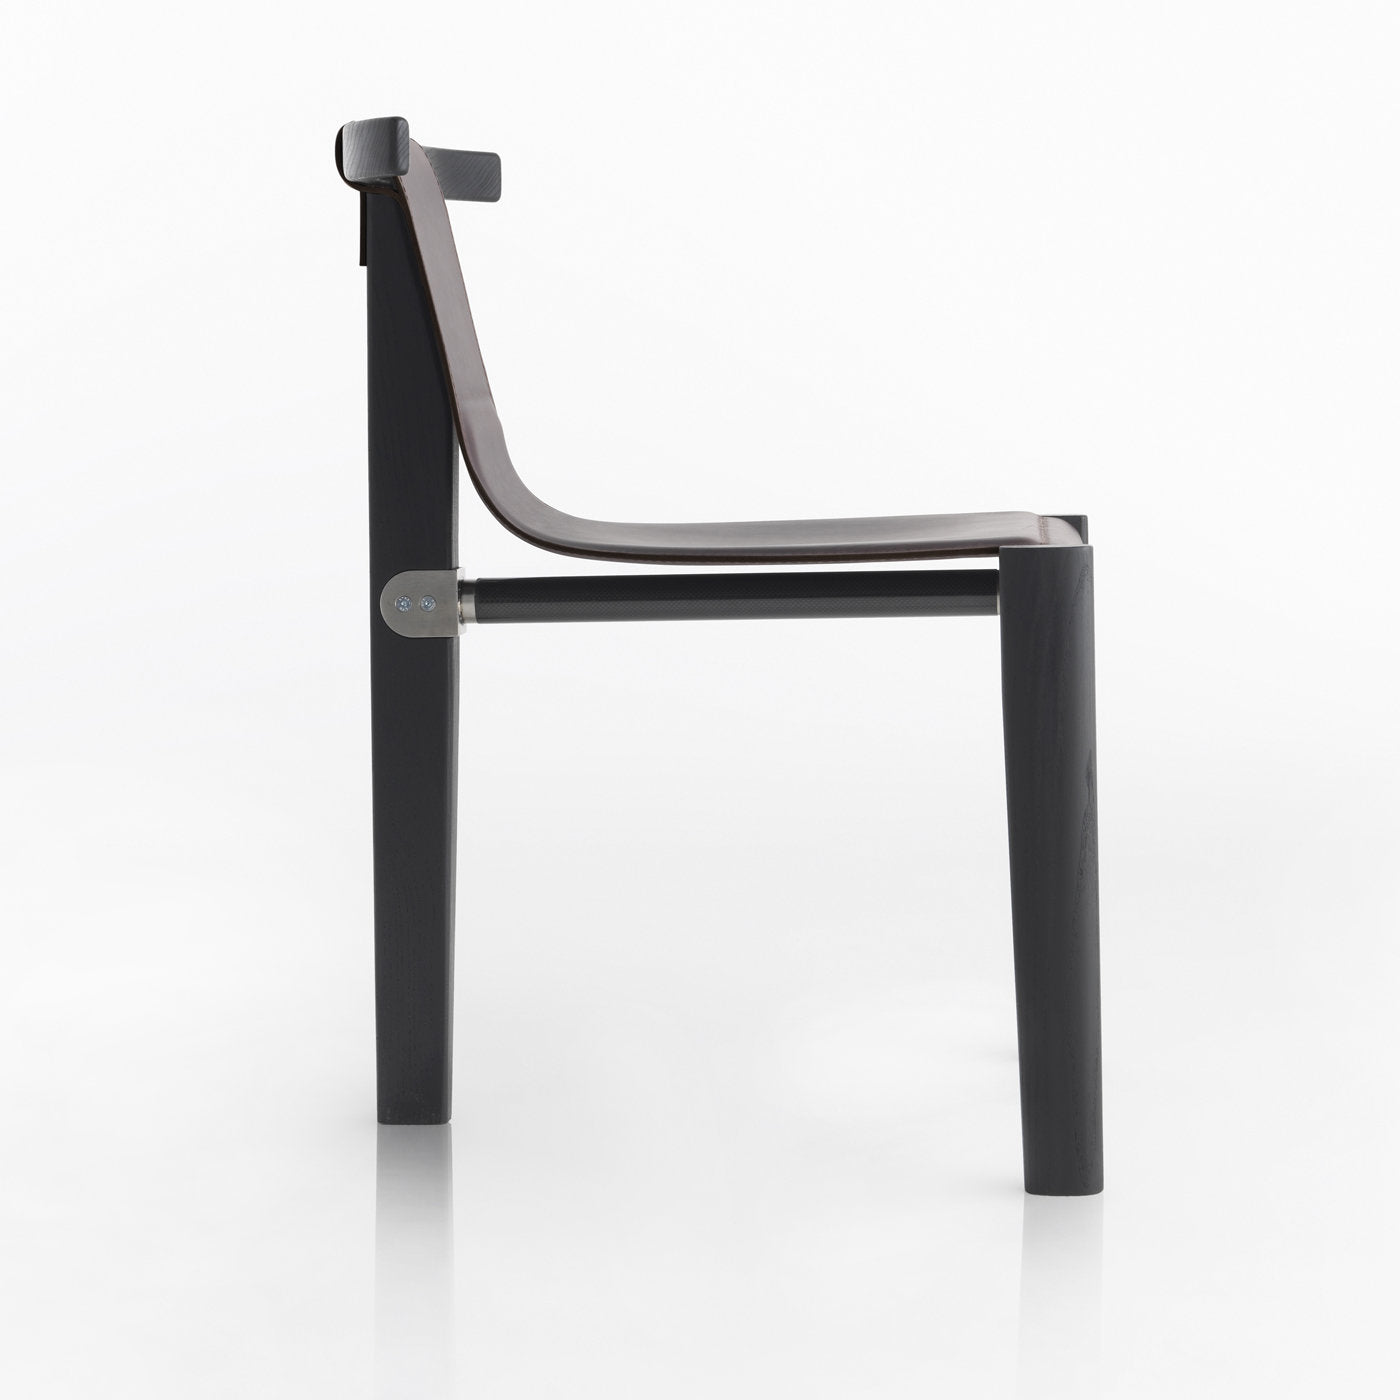 Pablita Brown Chair by Marcello Pozzi - Alternative view 4